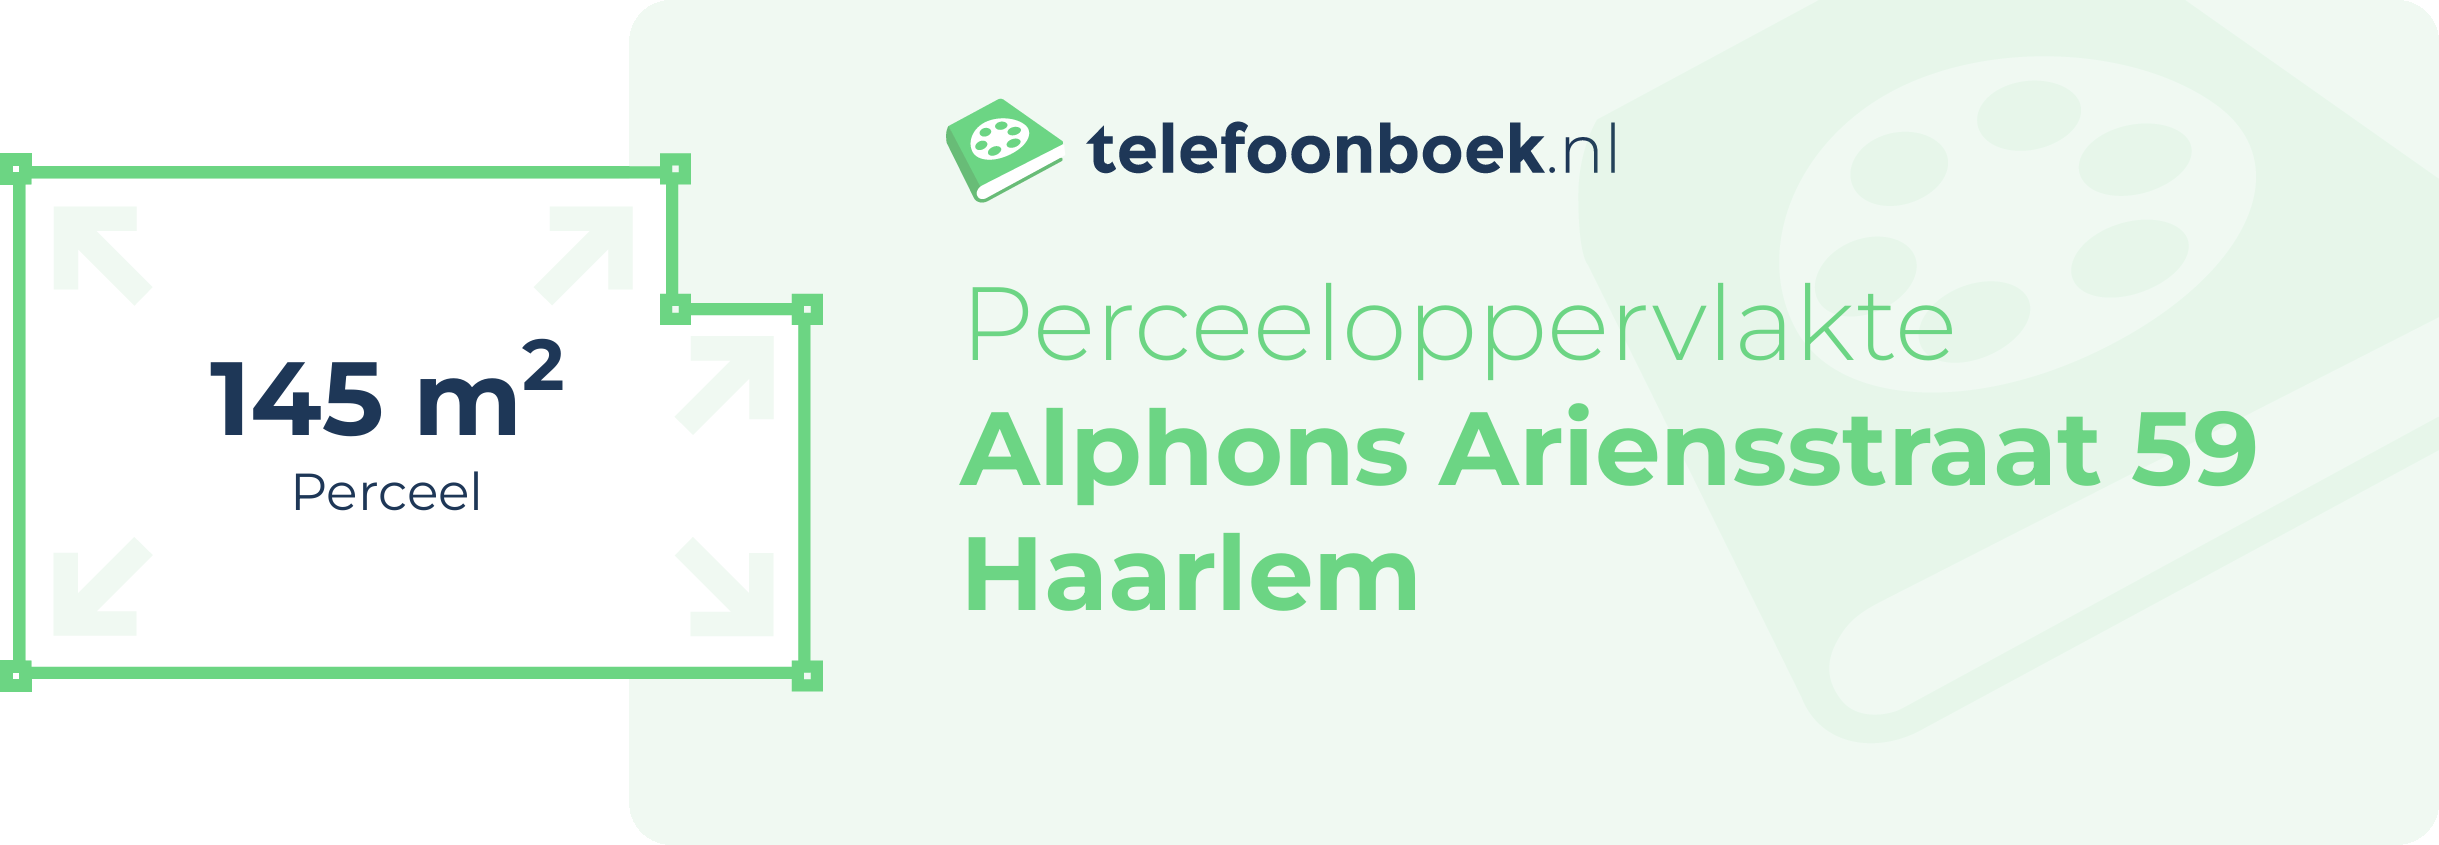 Perceeloppervlakte Alphons Ariensstraat 59 Haarlem